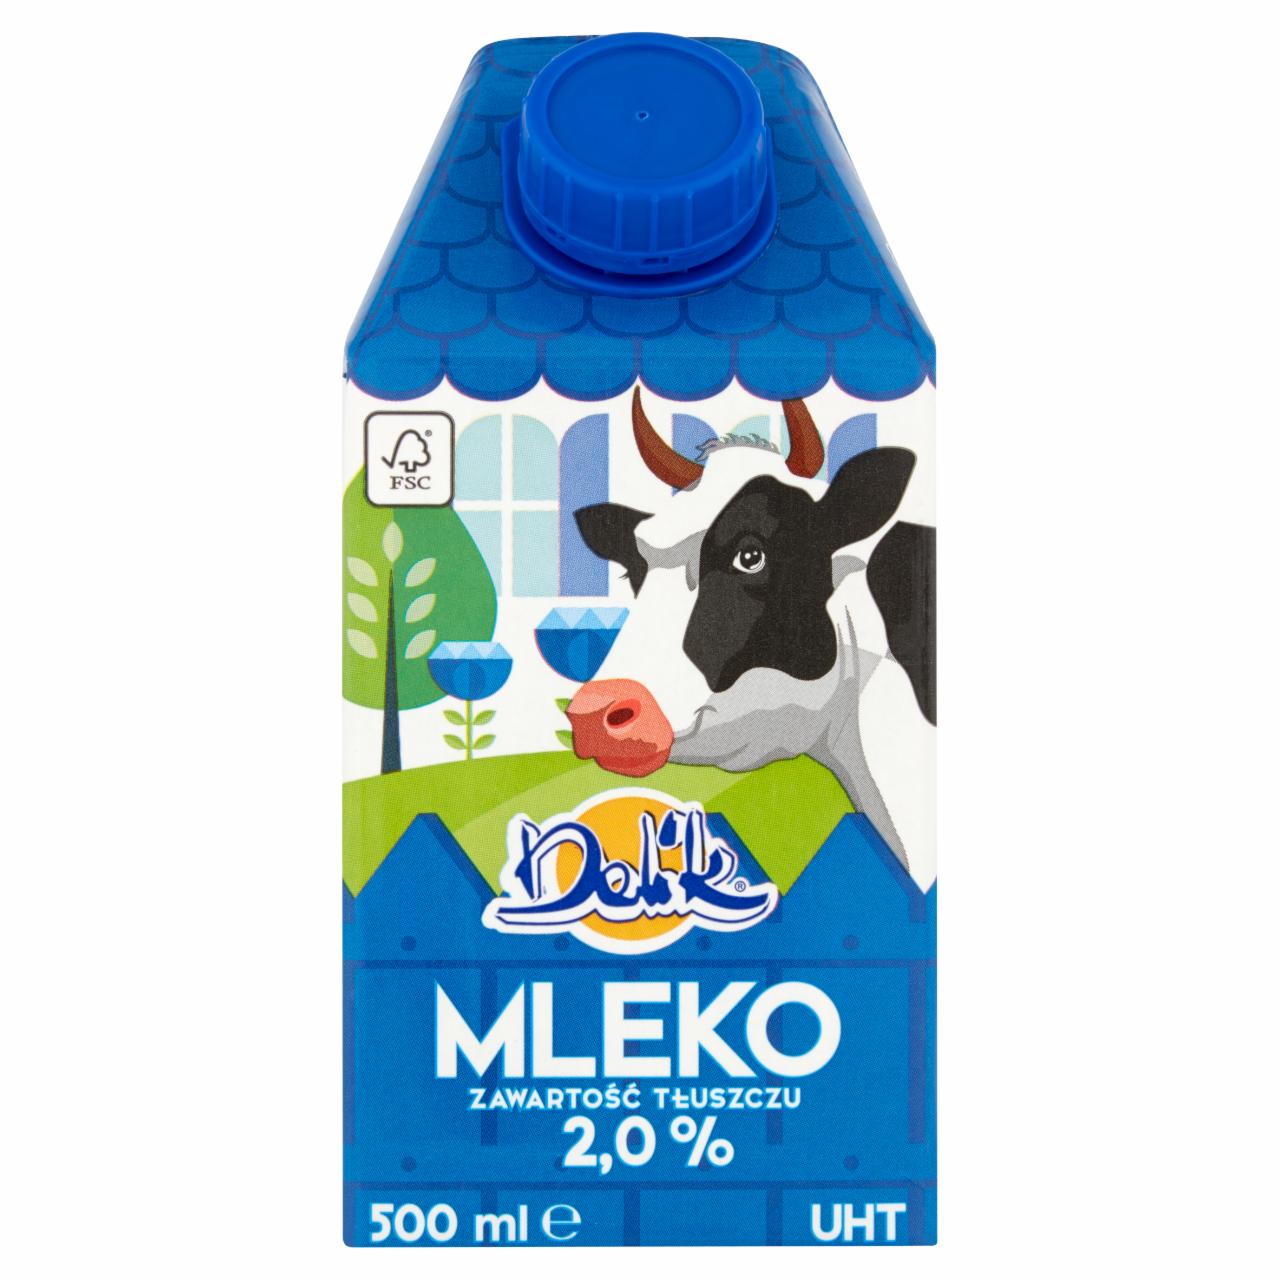 Zdjęcia - Delik Mleko UHT 2,0% 500 ml